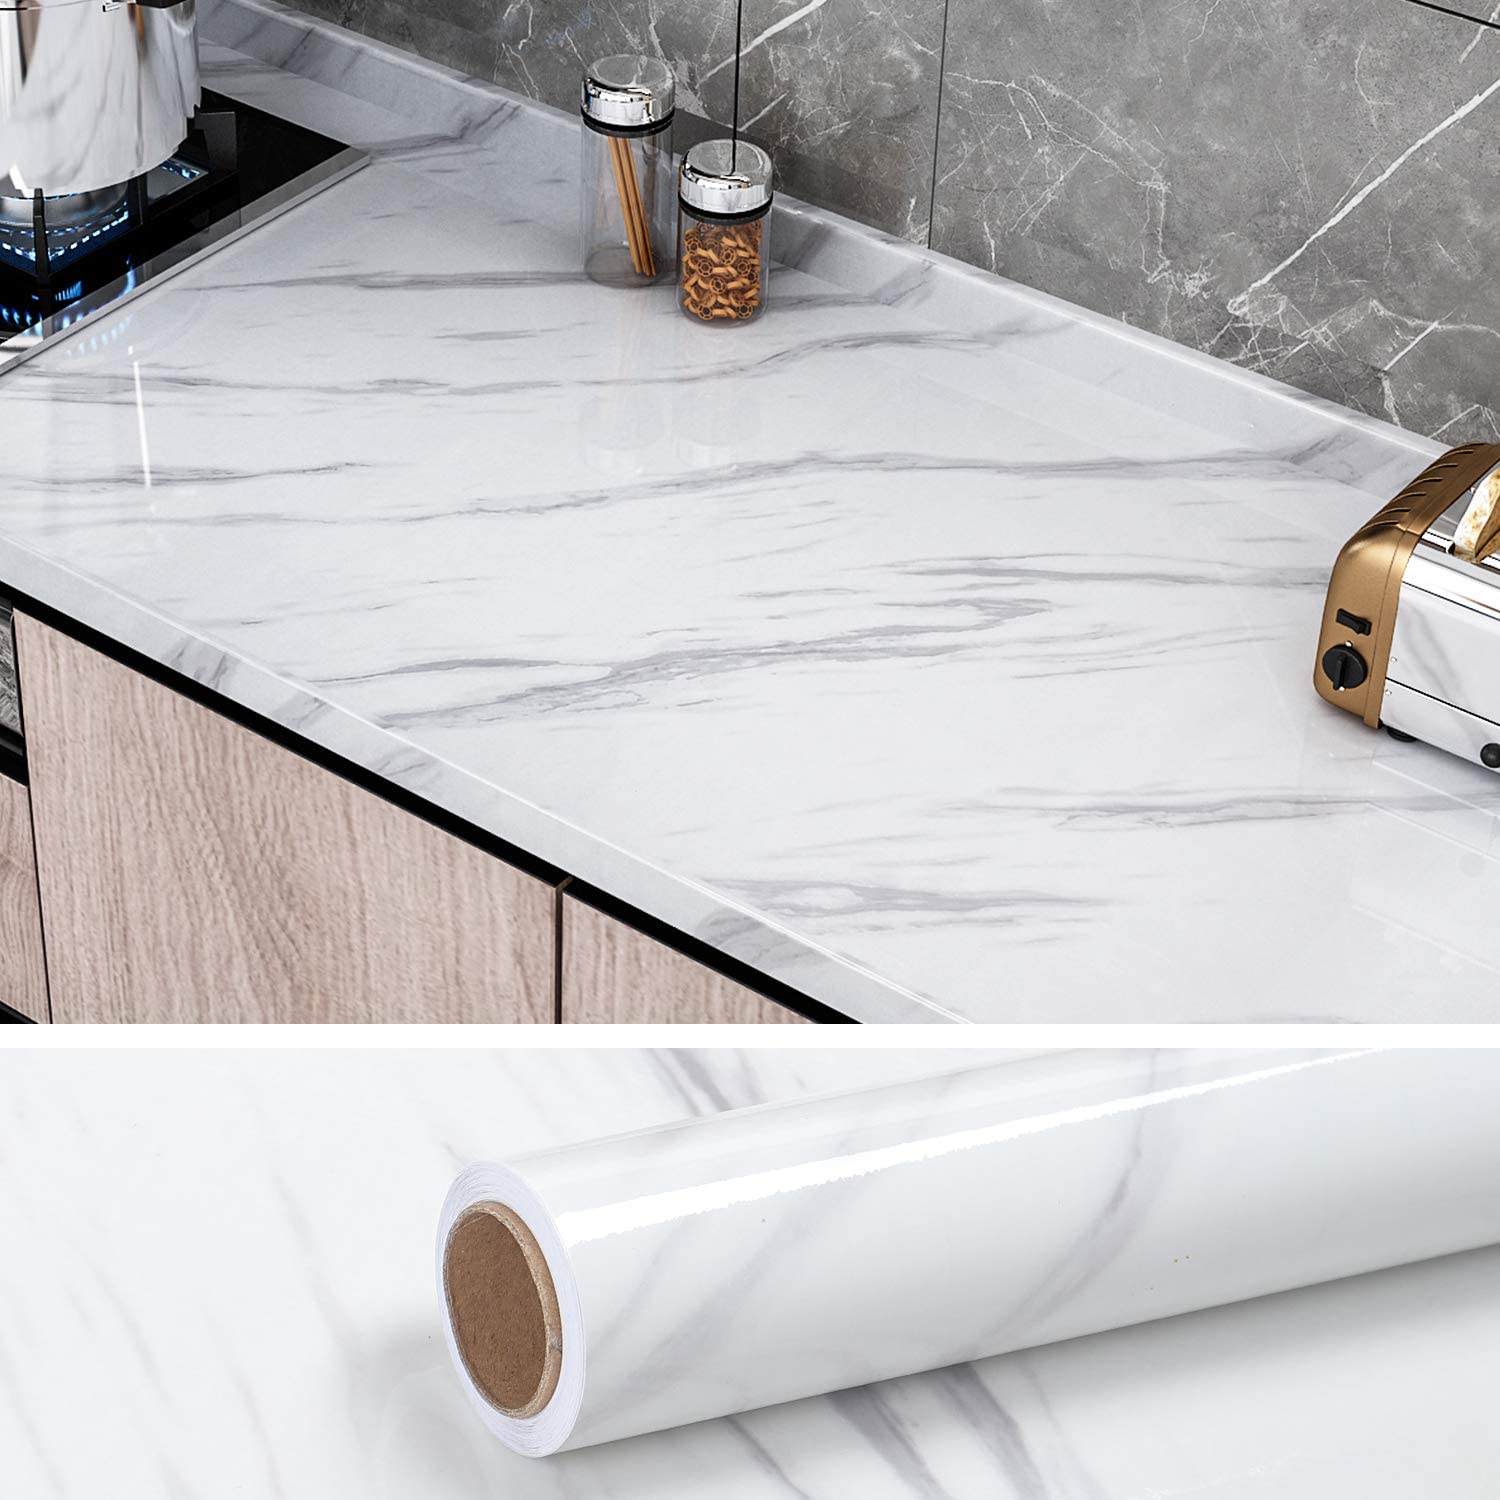 Self Adhesive Black & White Marble Sheet for Kitchen / Waterproof Anti Oil & Heat Resistant Wallpaper Sheet (2 Feet x 6.5 feet)